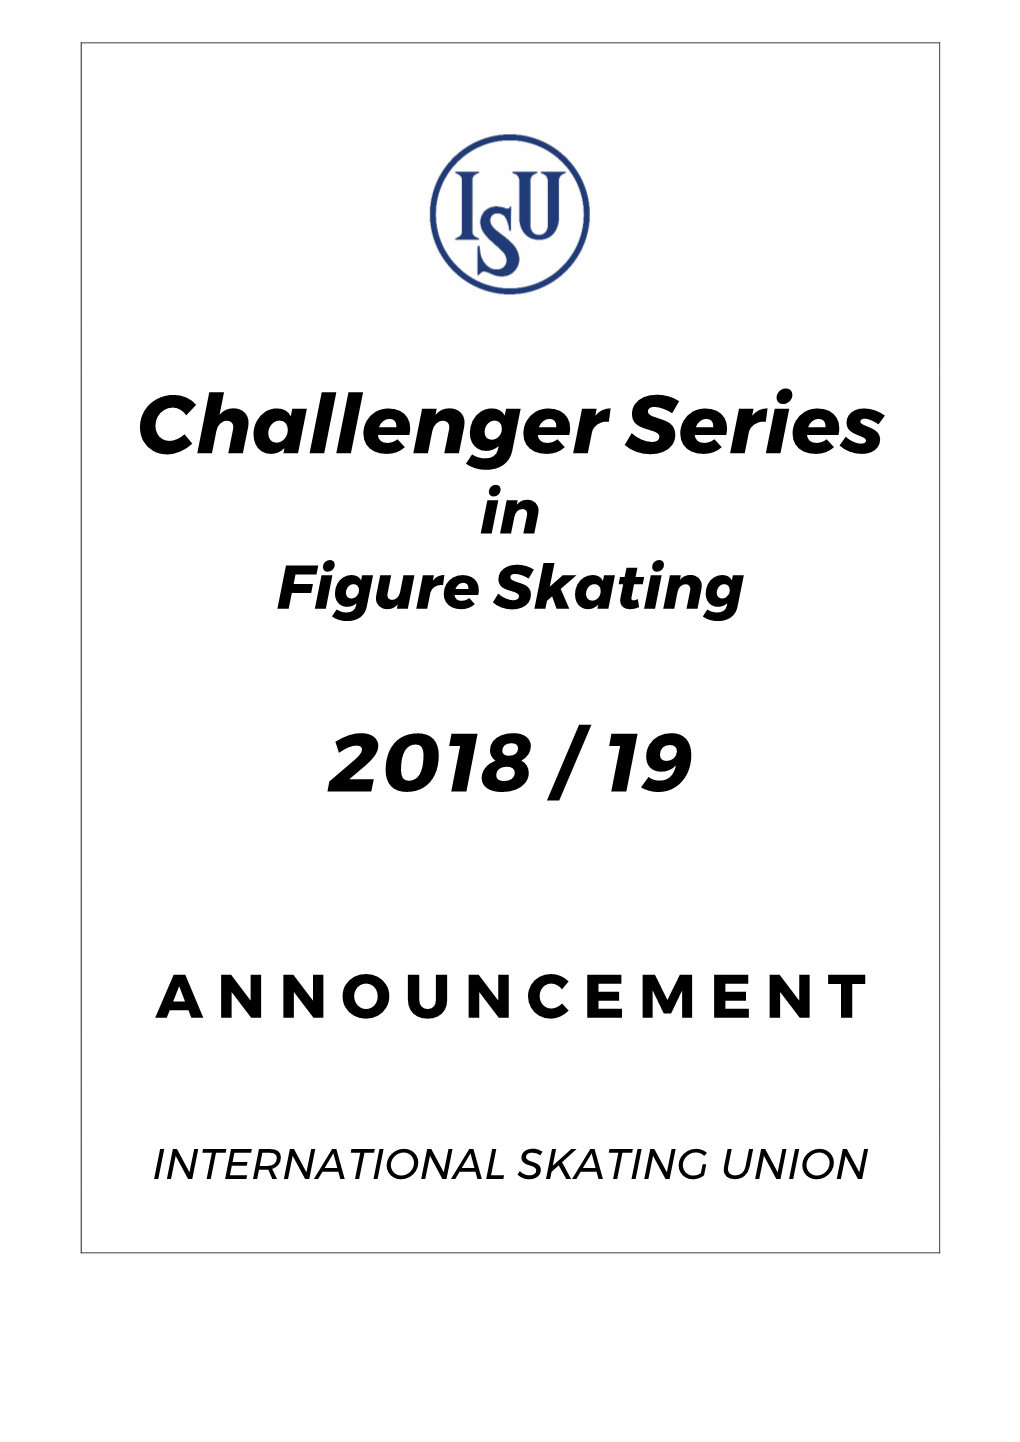 ISU Challenger Series in Figure Skating 2018/19